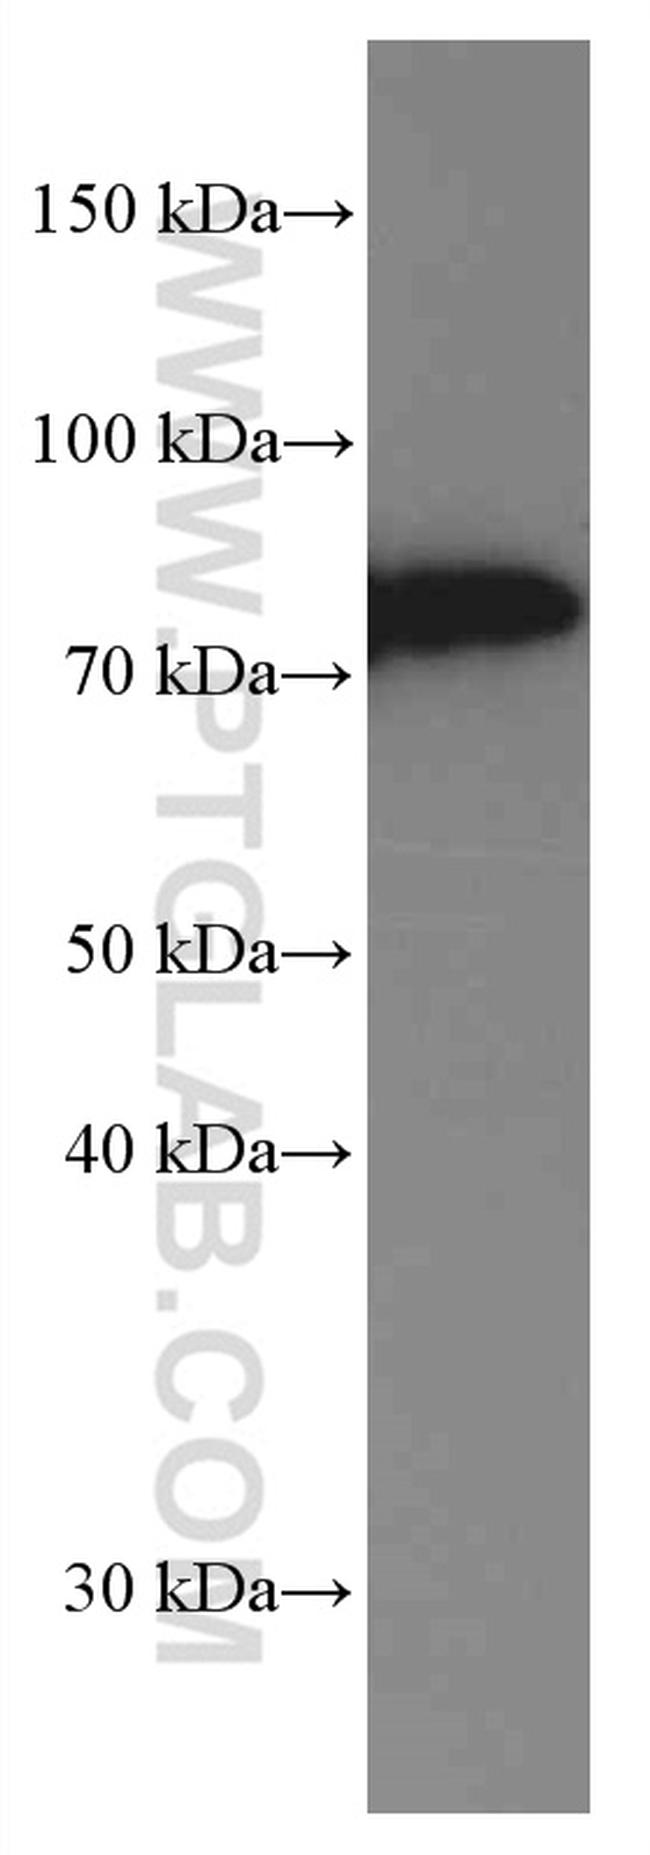 SLP76 Antibody in Western Blot (WB)